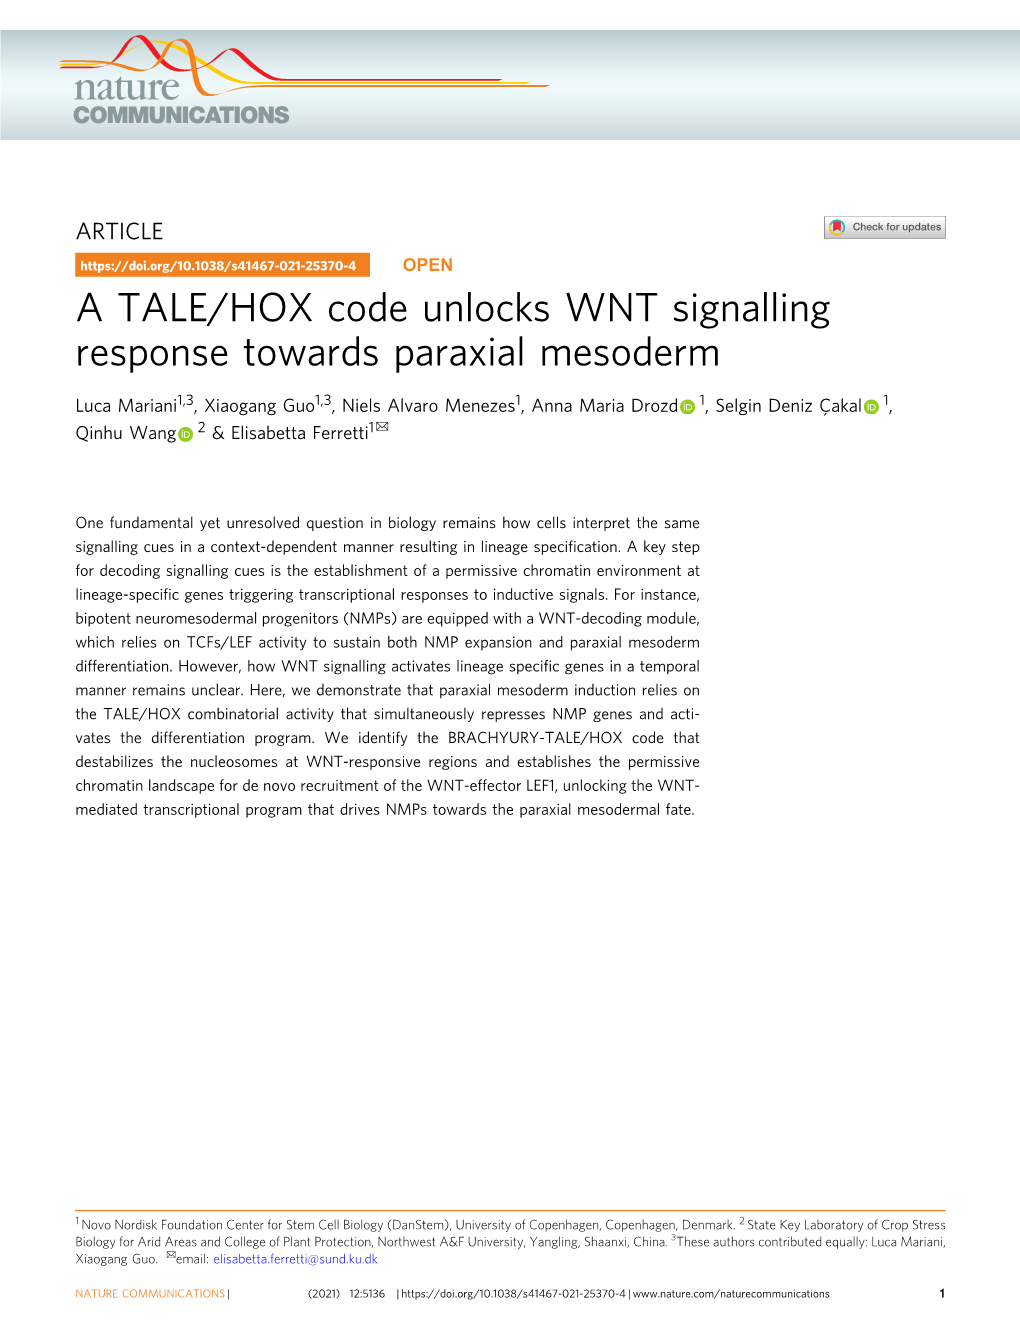 A TALE/HOX Code Unlocks WNT Signalling Response Towards Paraxial Mesoderm